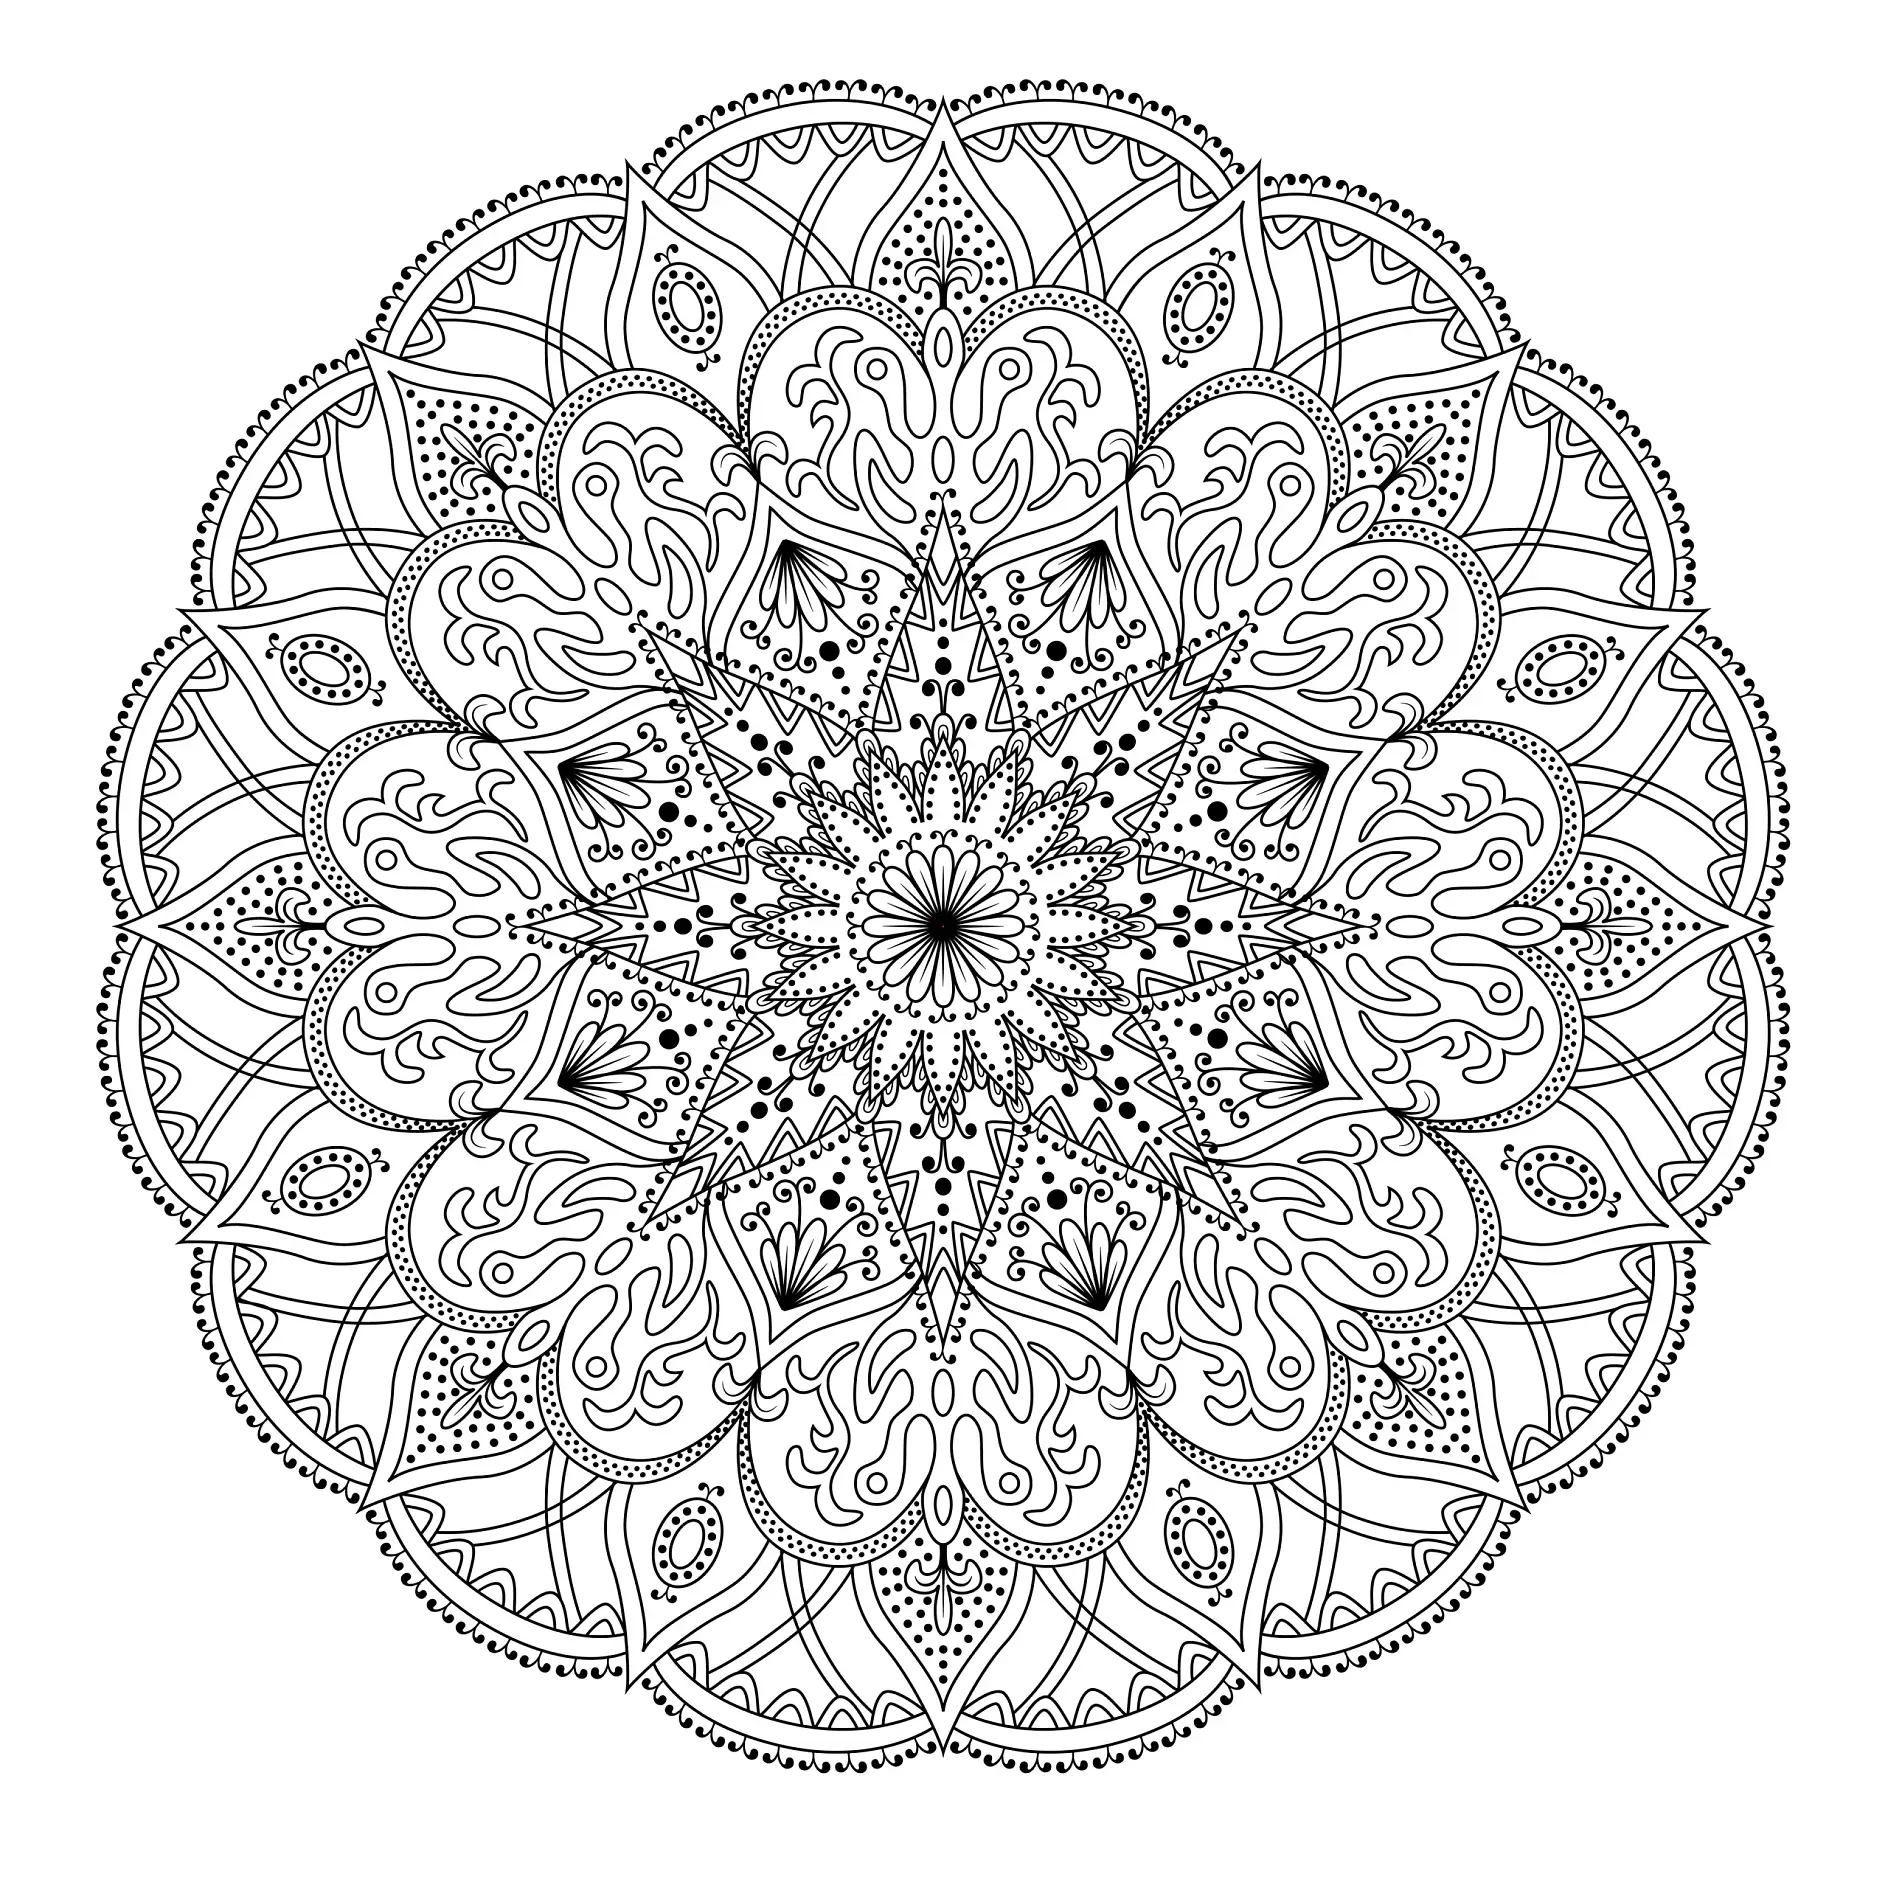 Ausmalbild Mandala mit filigranen Mustern und Blättern